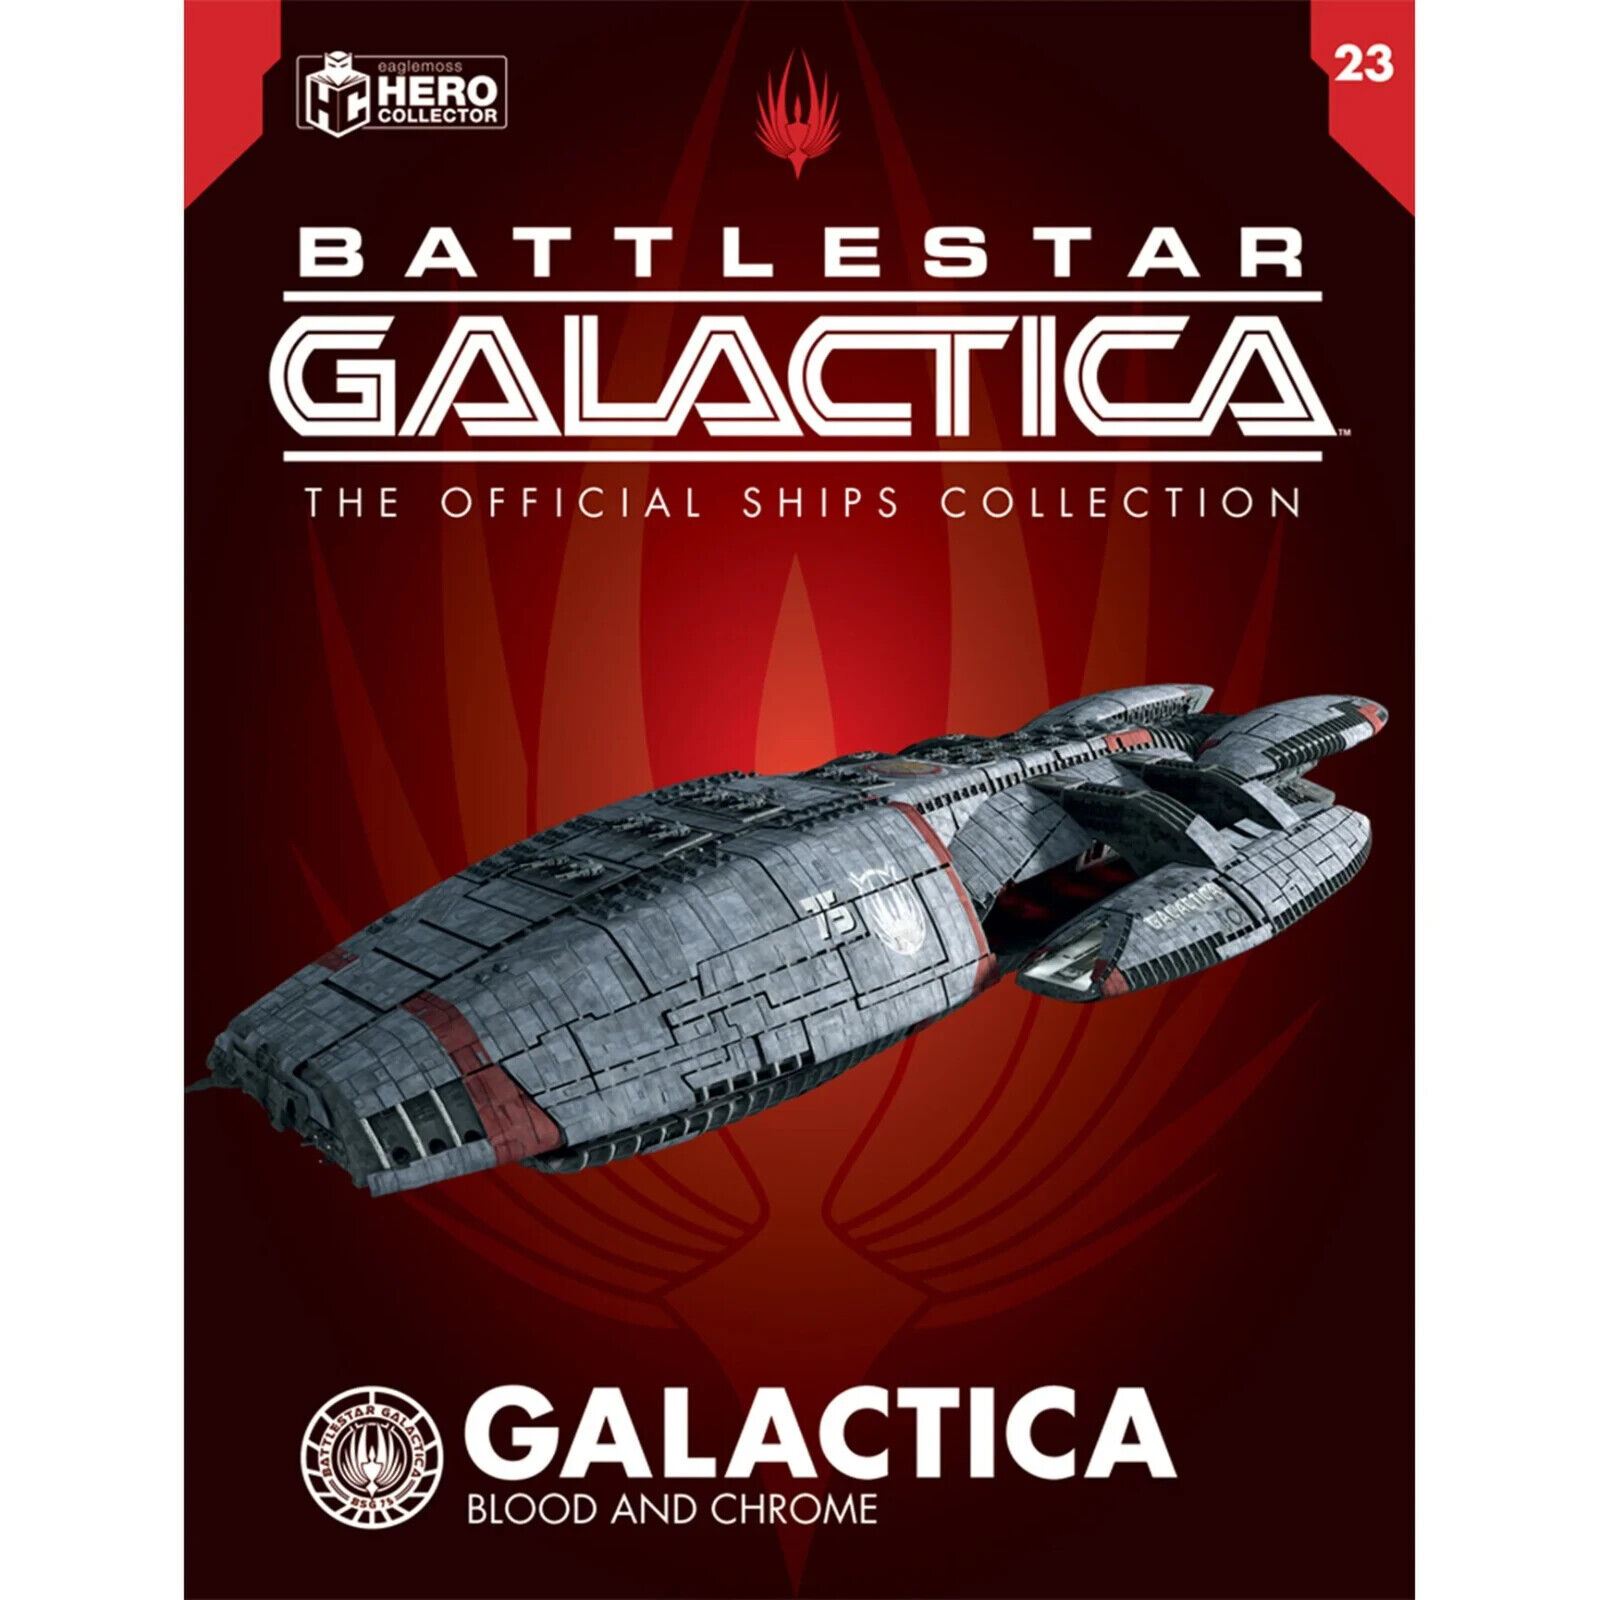 Battlestar Galactica Blood & Chrome GALACTICA Model Ship Eaglemoss ISSUE 23